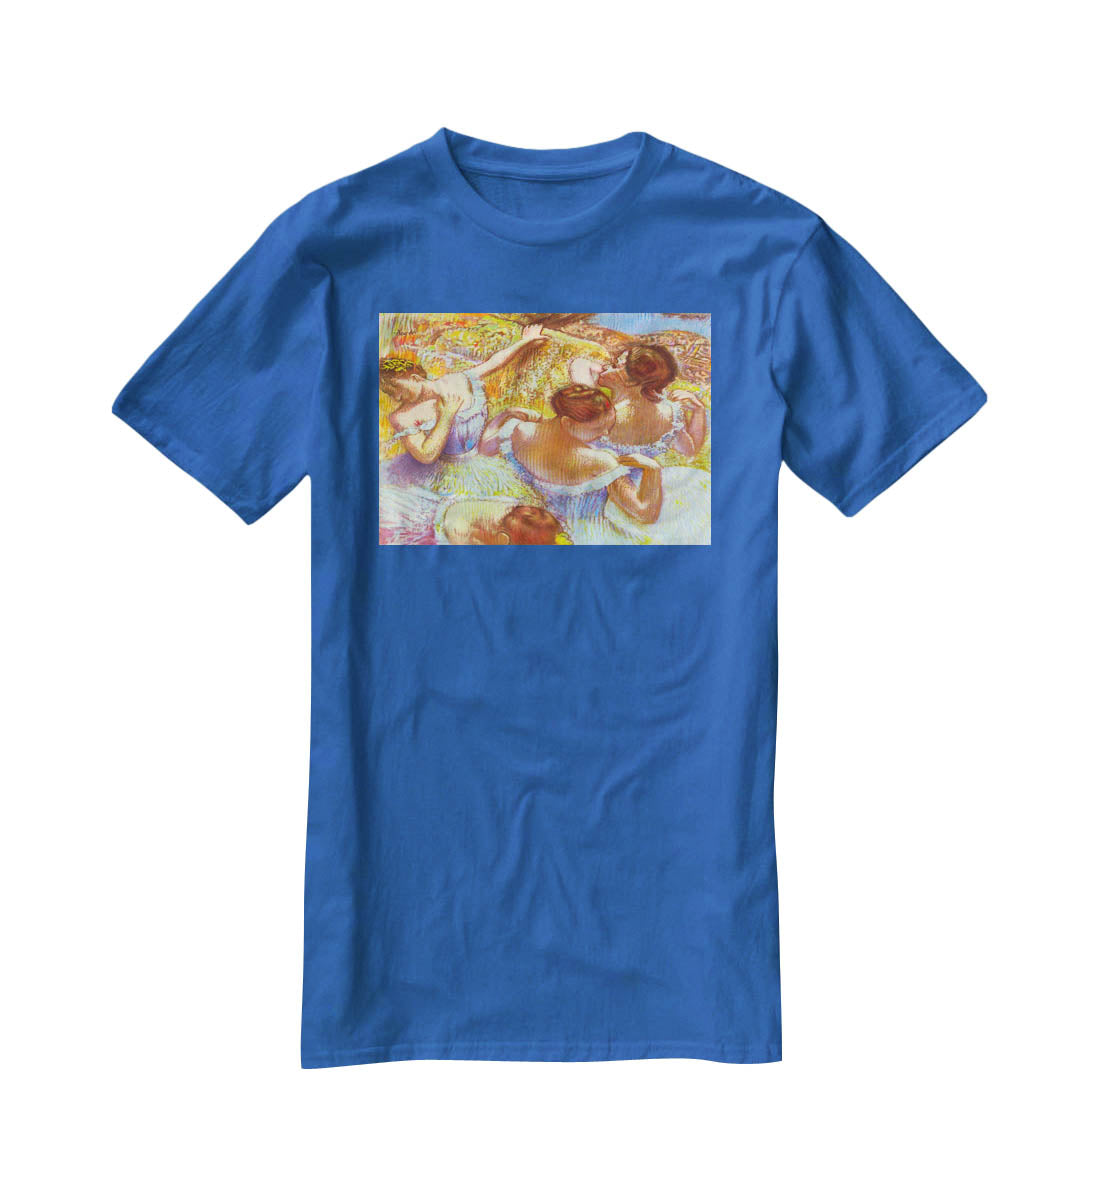 Dancers in blue by Degas T-Shirt - Canvas Art Rocks - 2